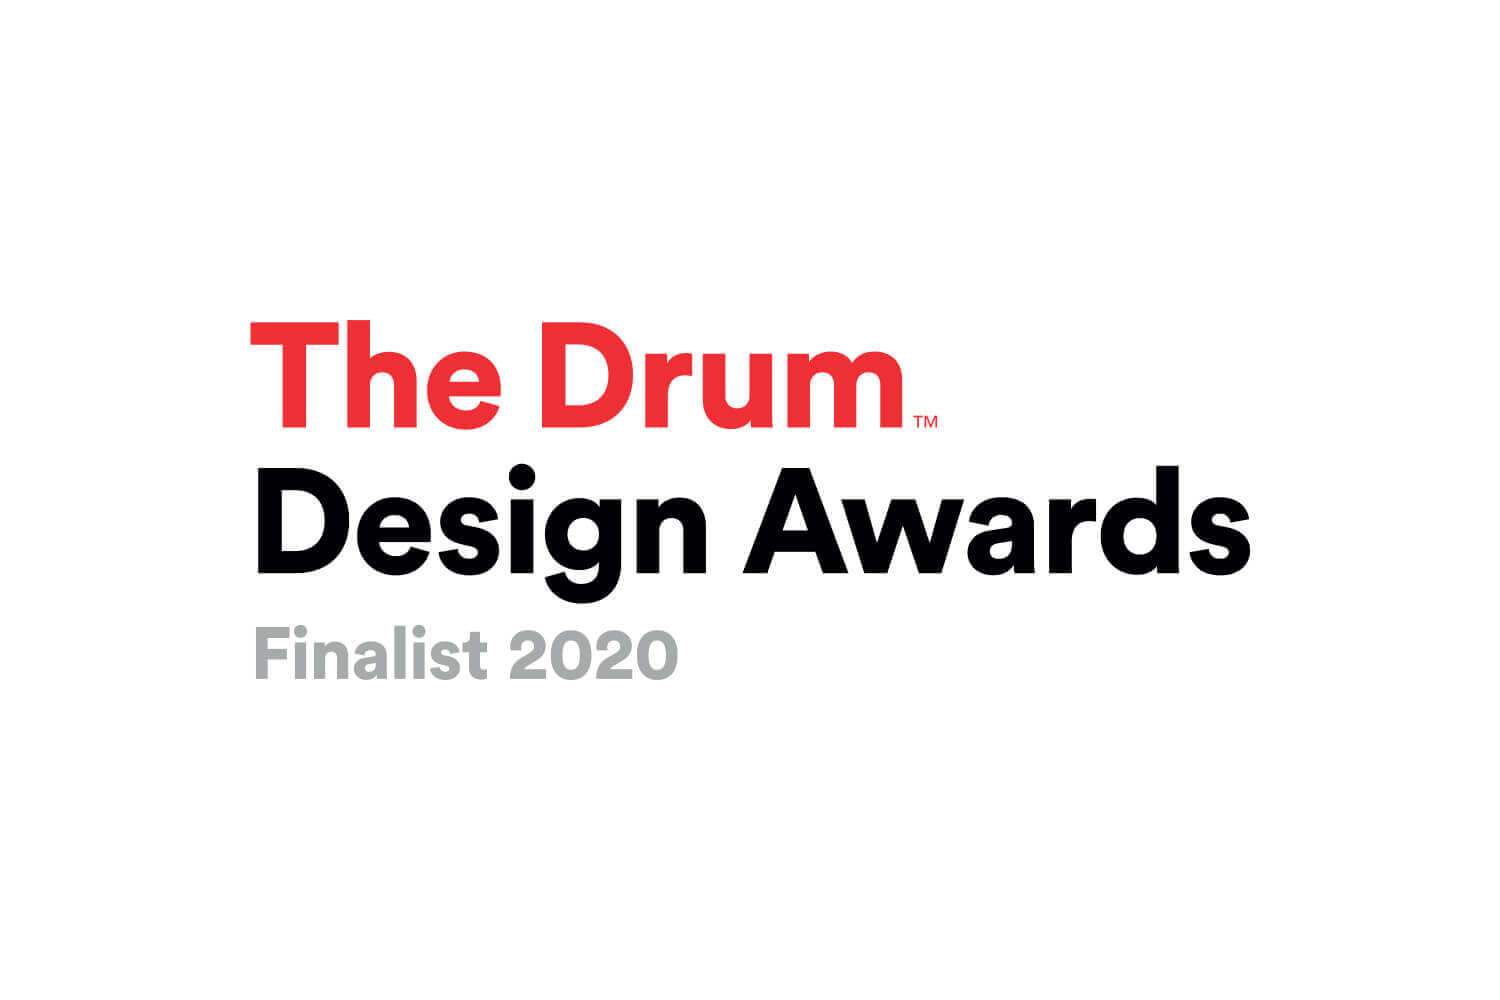 Crumbs brewing - The Drum Design Awards Finalist 2020